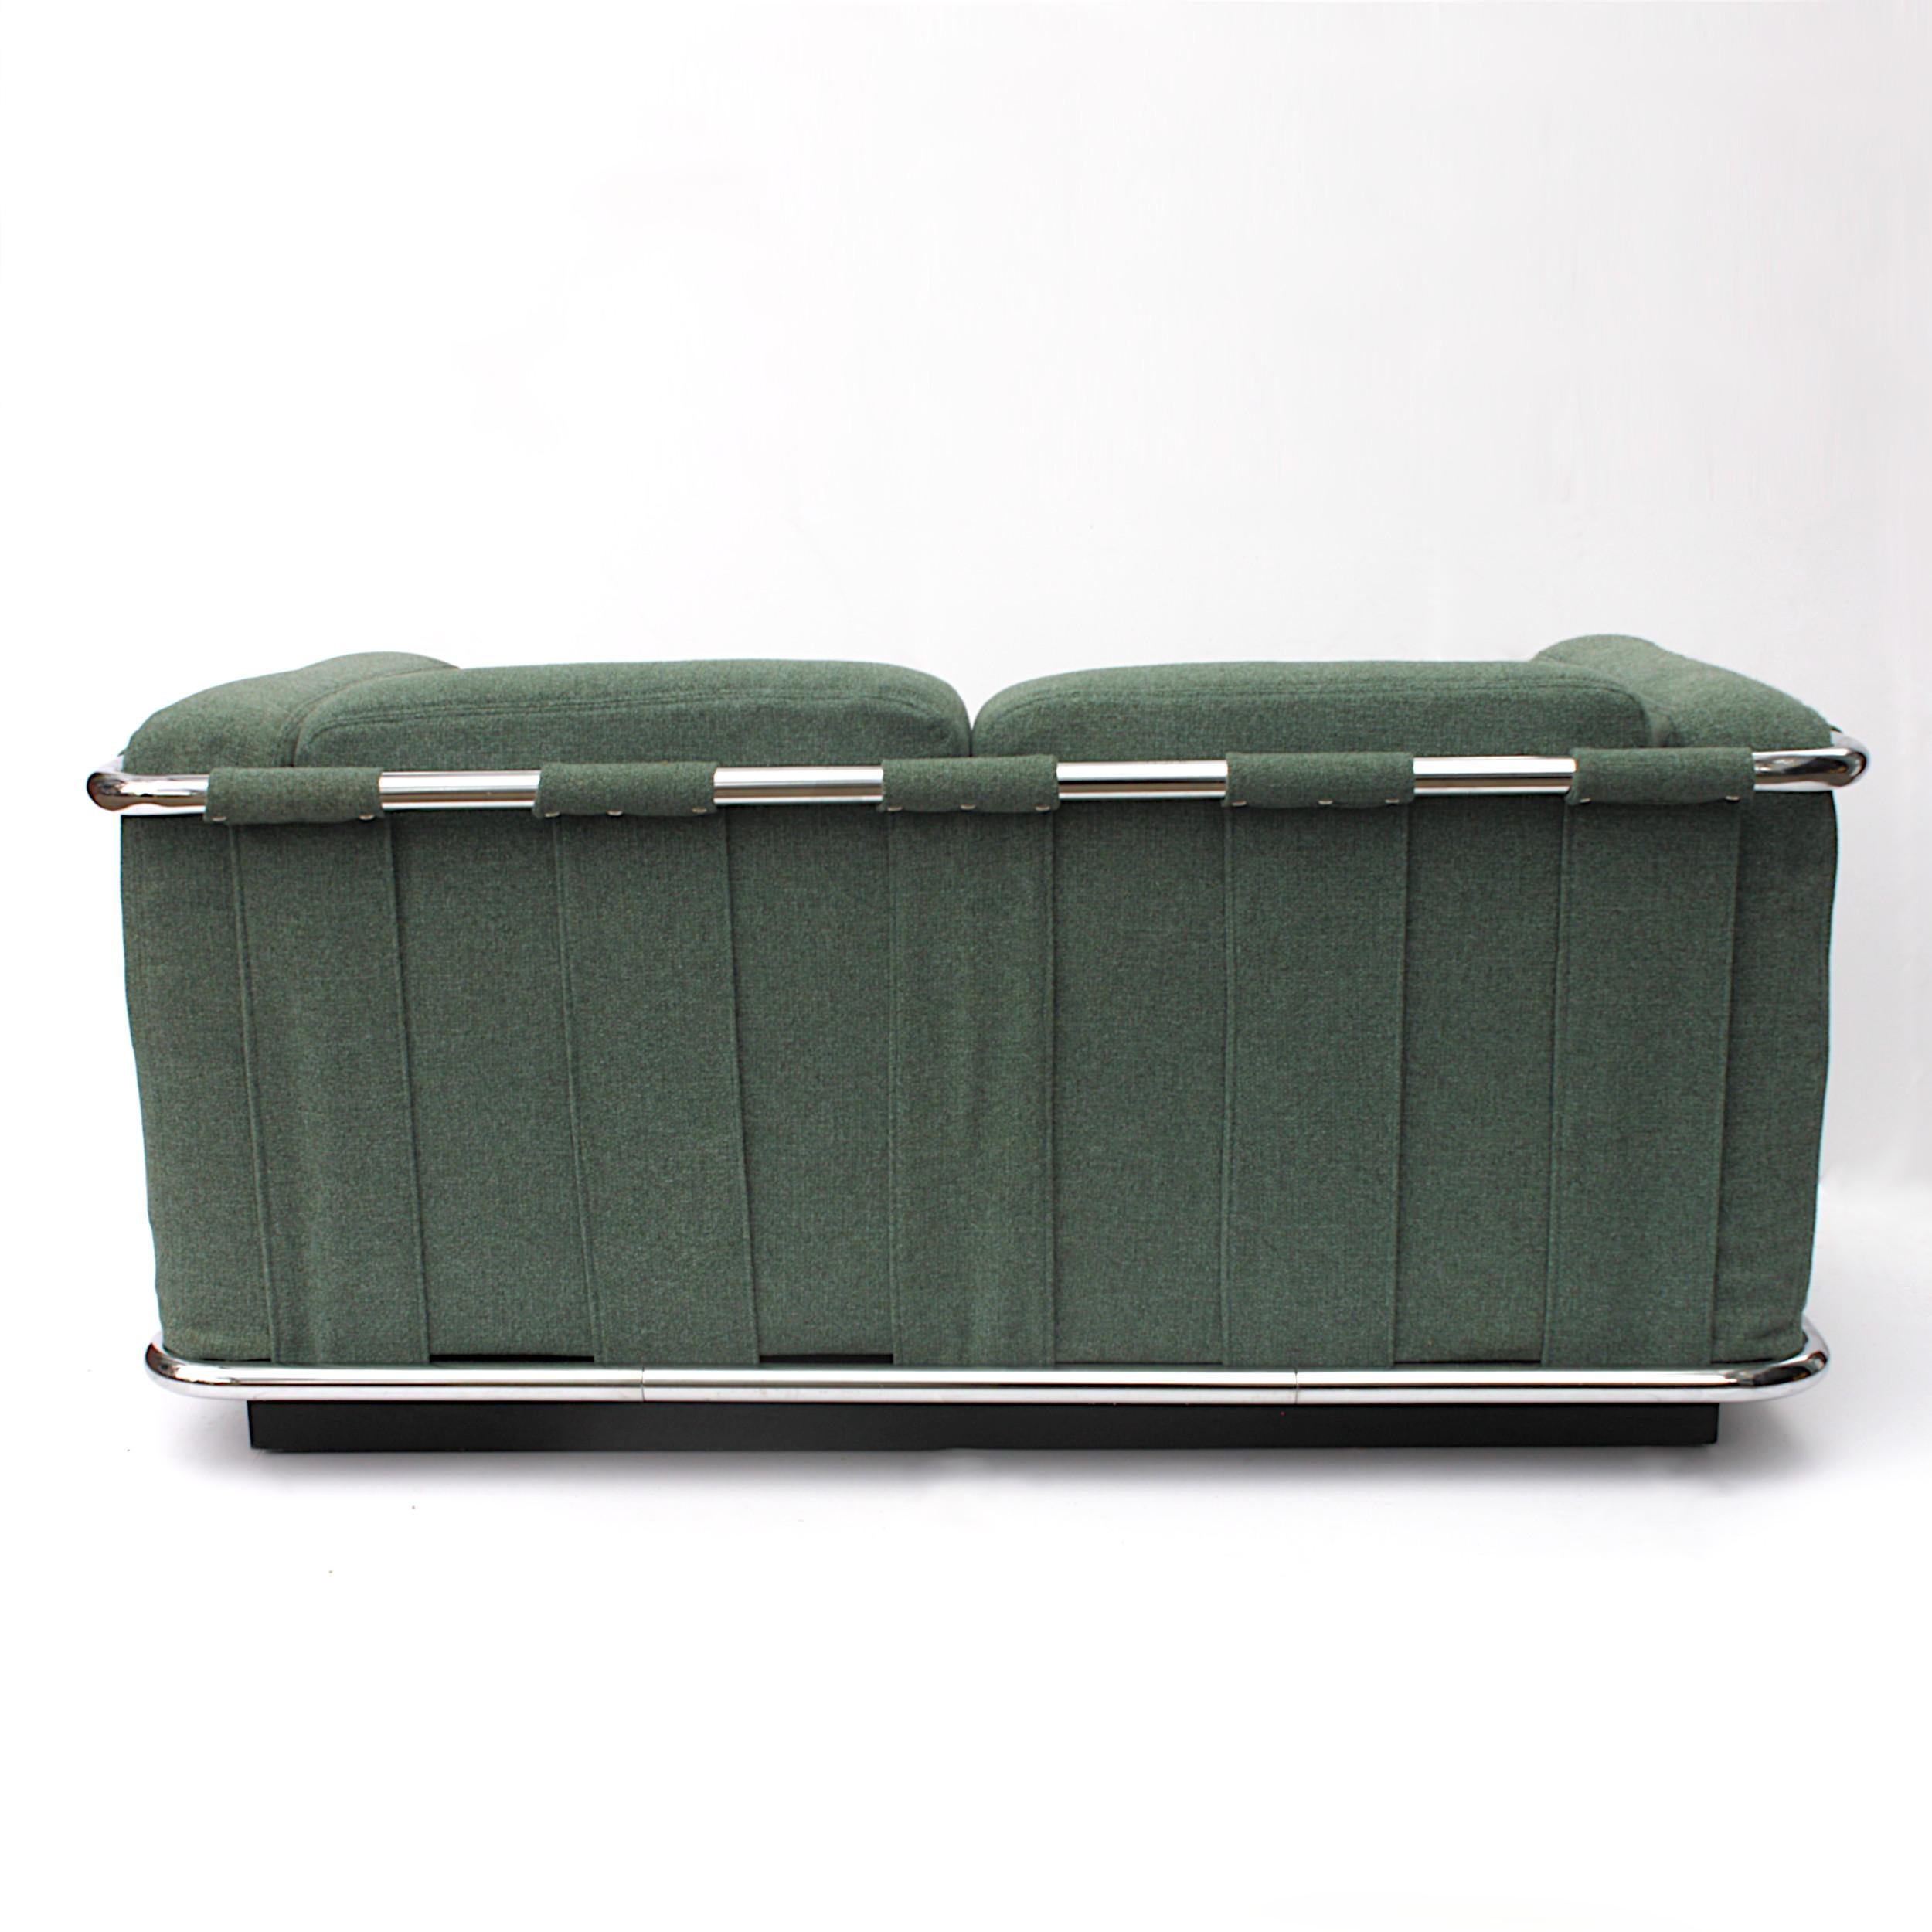 American Vintage 1970s Tubular Chrome Mid-Century Modern Loveseat Sofa by Thonet